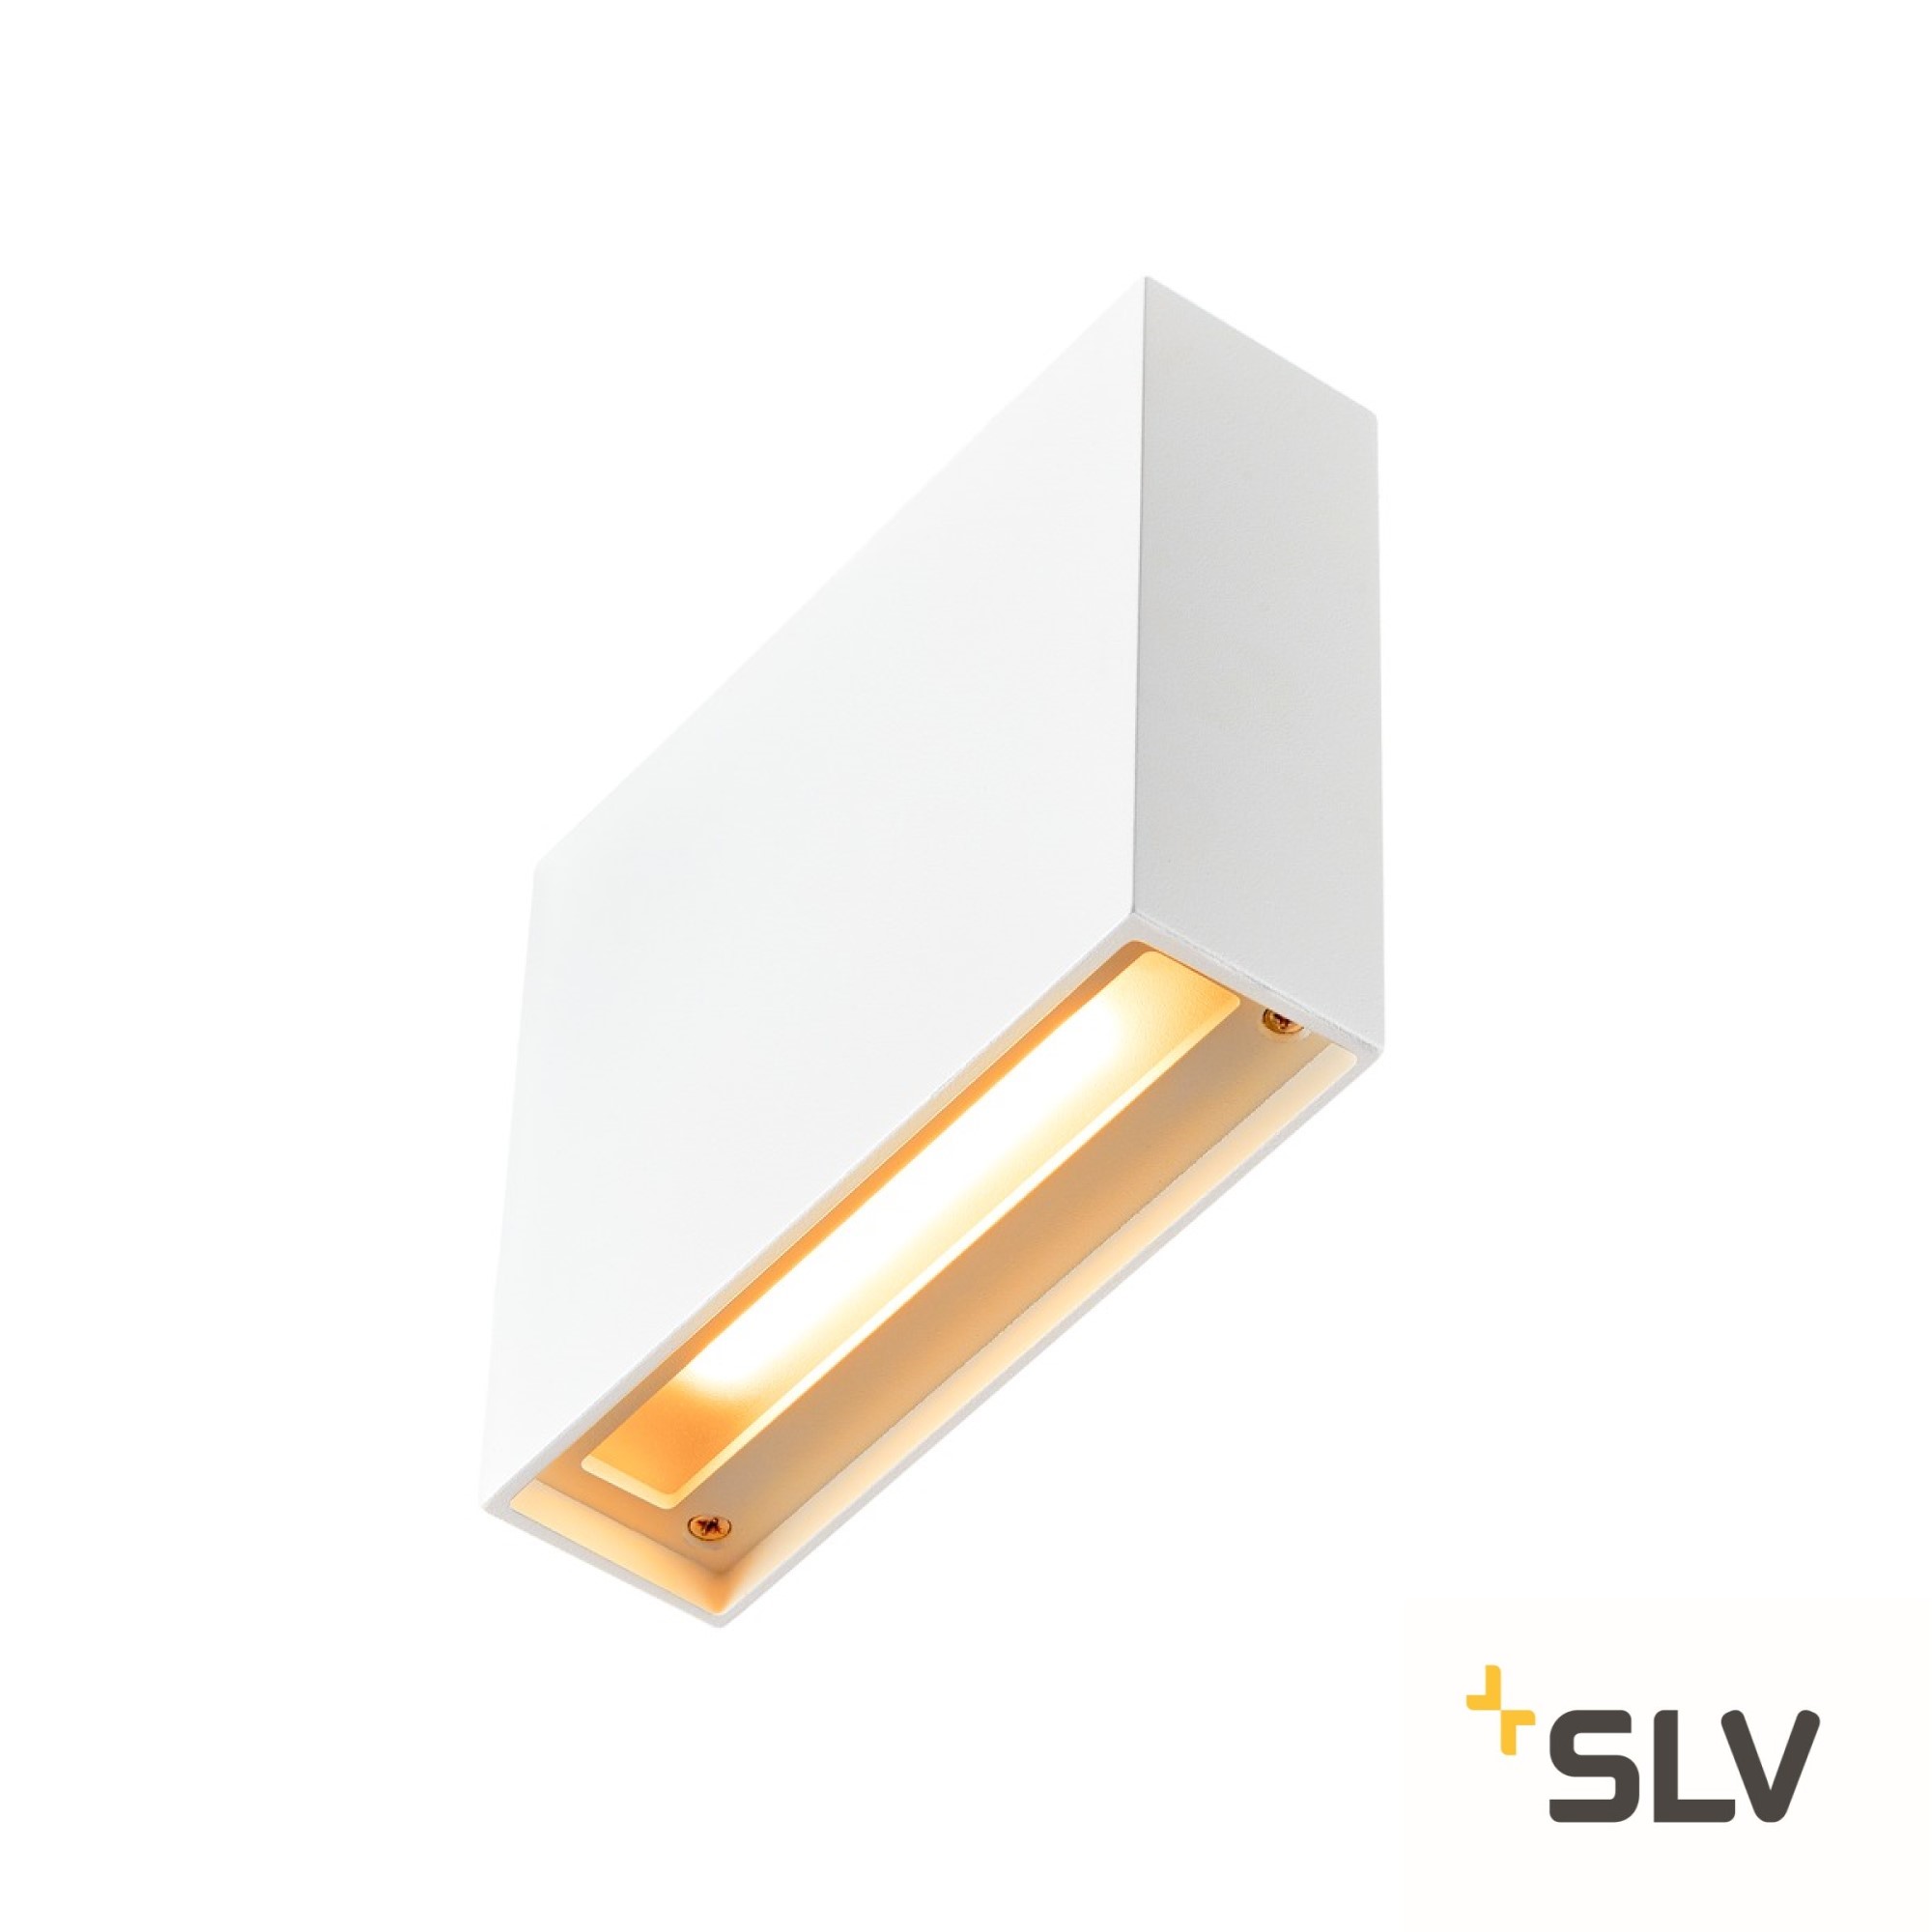 SLV QUAD FRAME 14 LED Wall Light 2700/3000K white TRIAC-dimmable 165lm